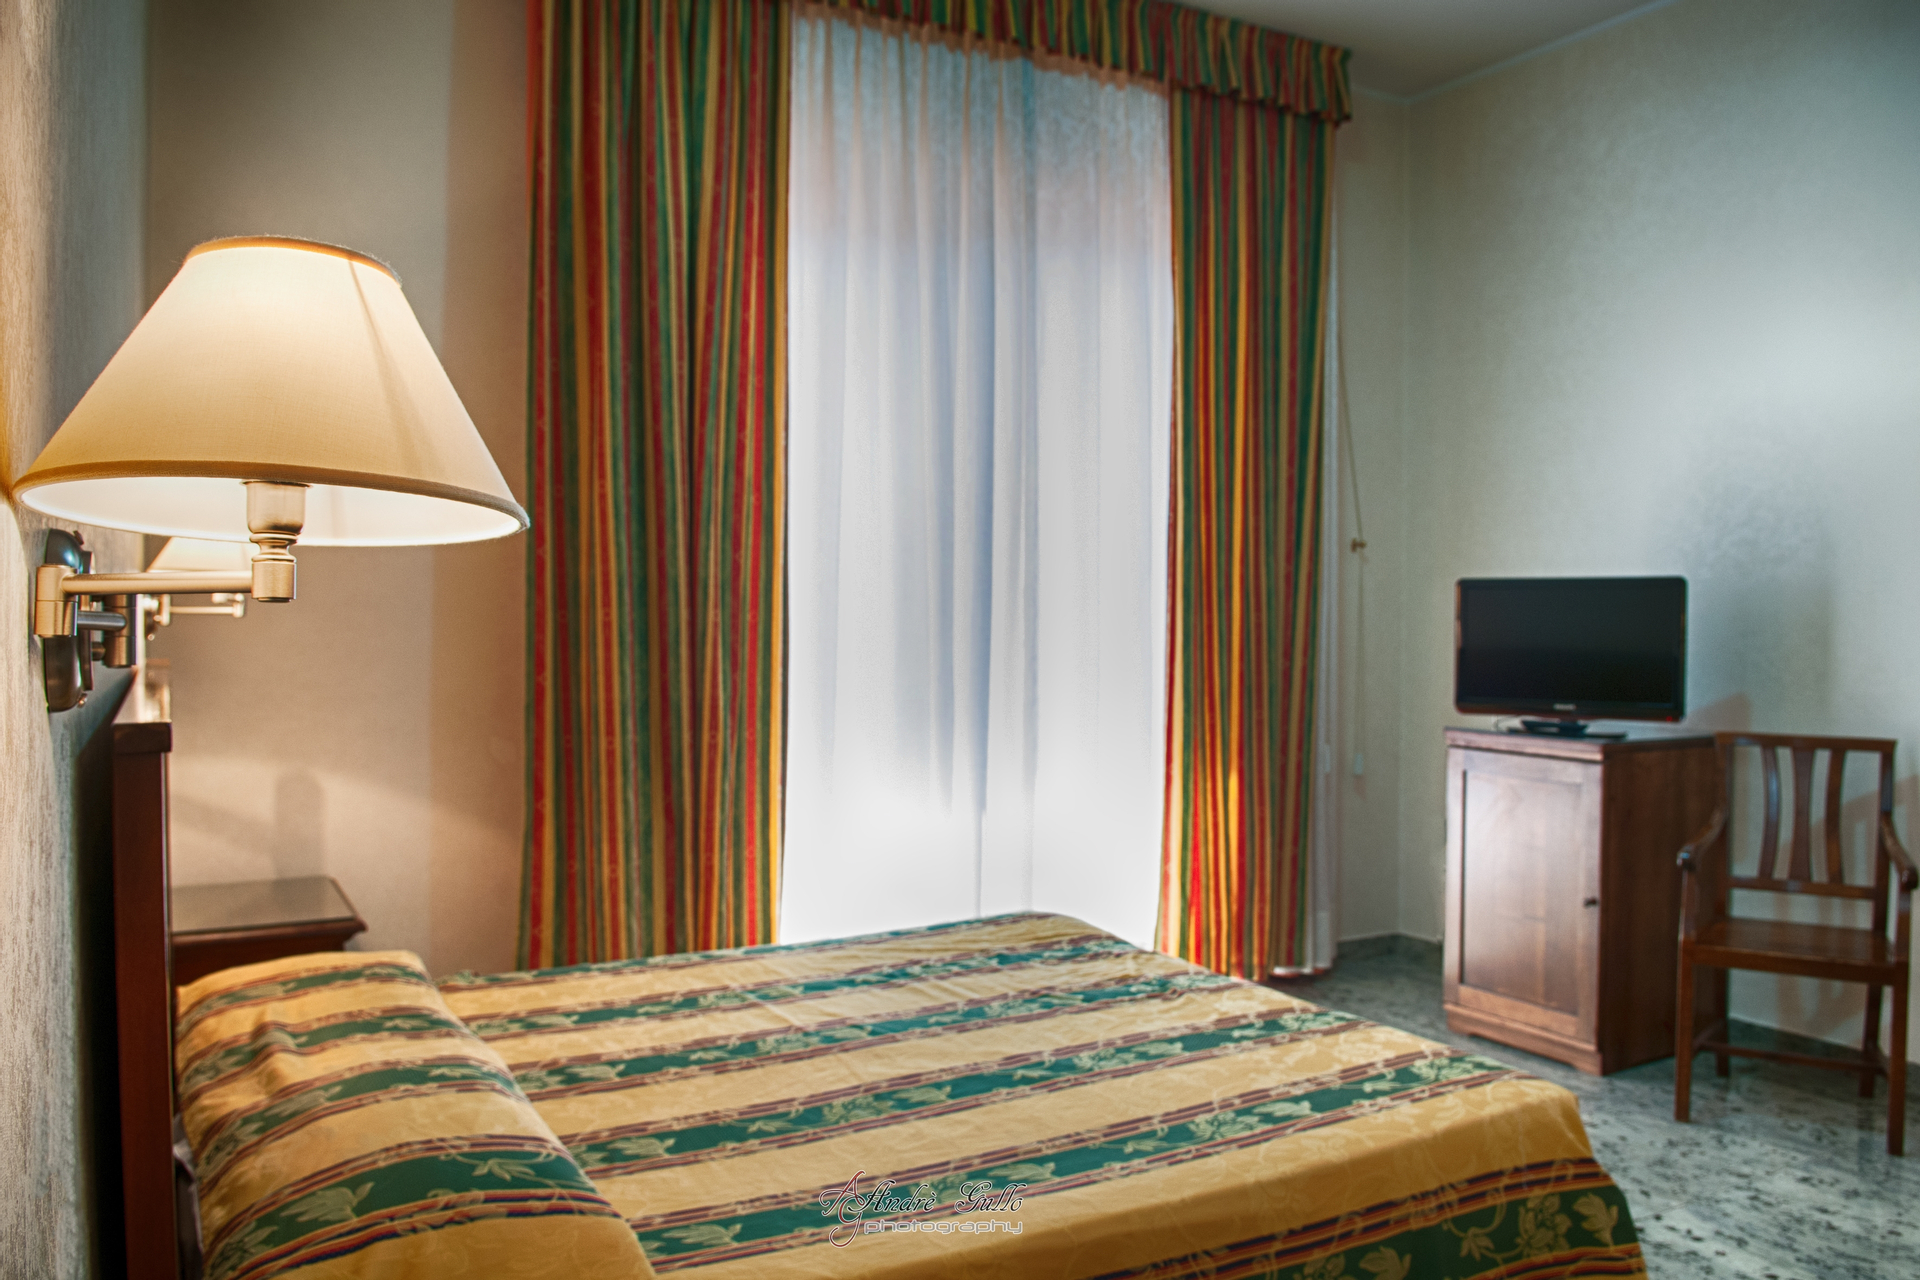 Bedroom 4, Arcobaleno Residence Hotel, Reggio Di Calabria